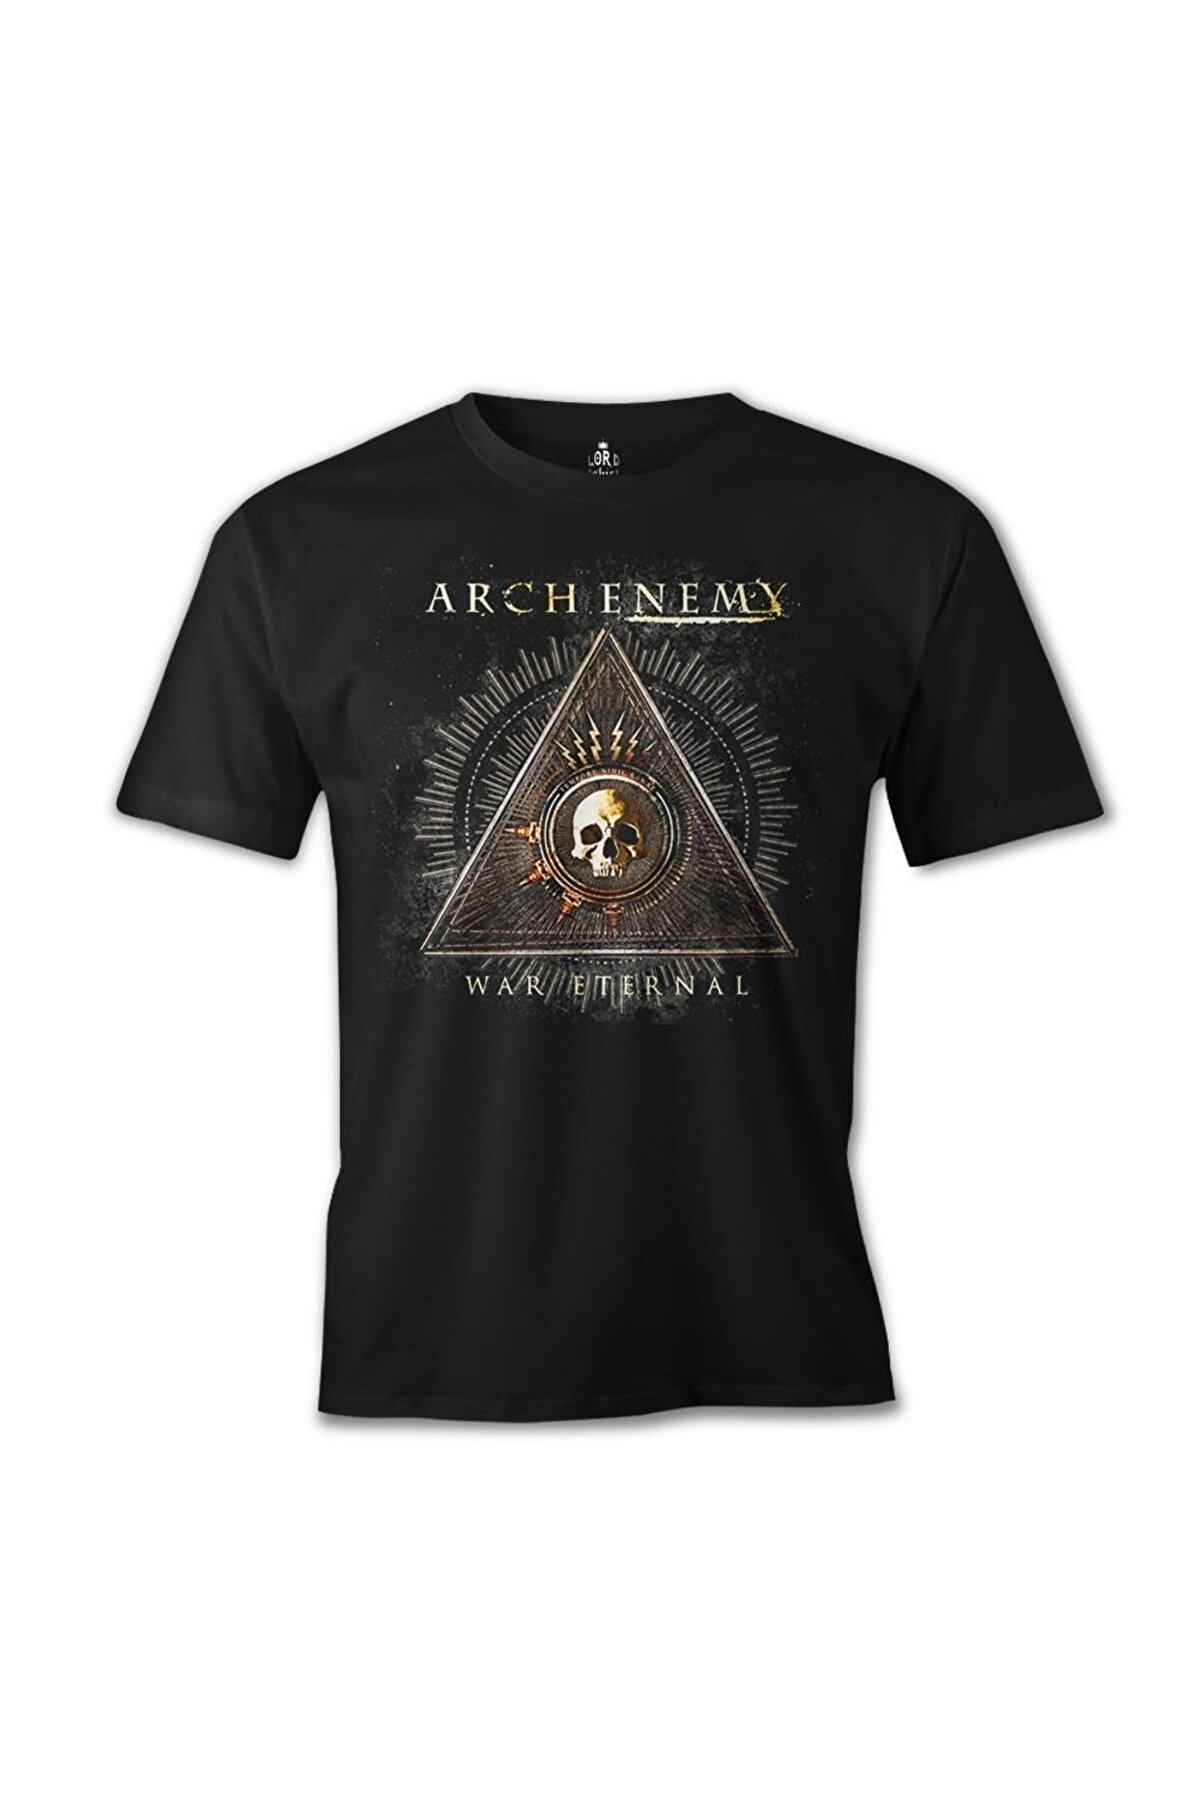 Lord T-Shirt Arch Enemy - War Eternal Siyah Erkek Tshirt